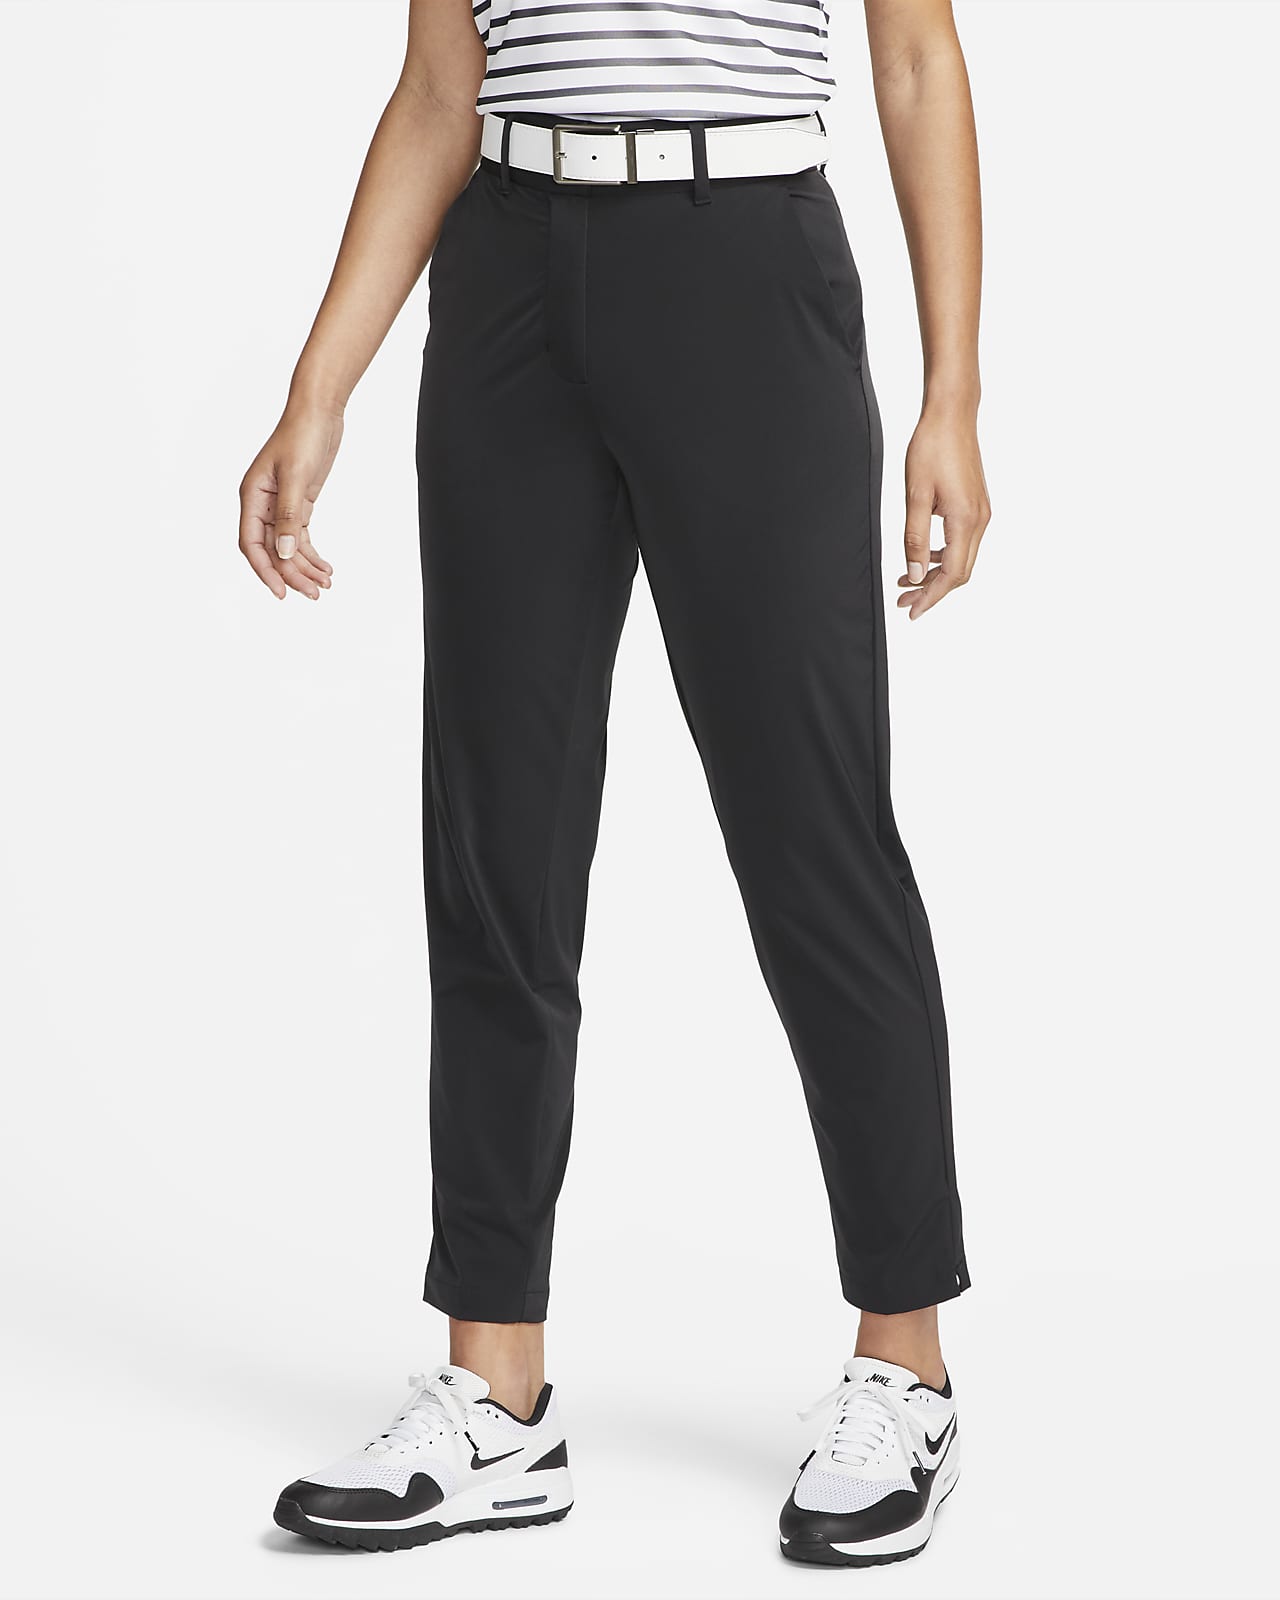 Nike Dri-FIT Tour Women's Golf Trousers. LU